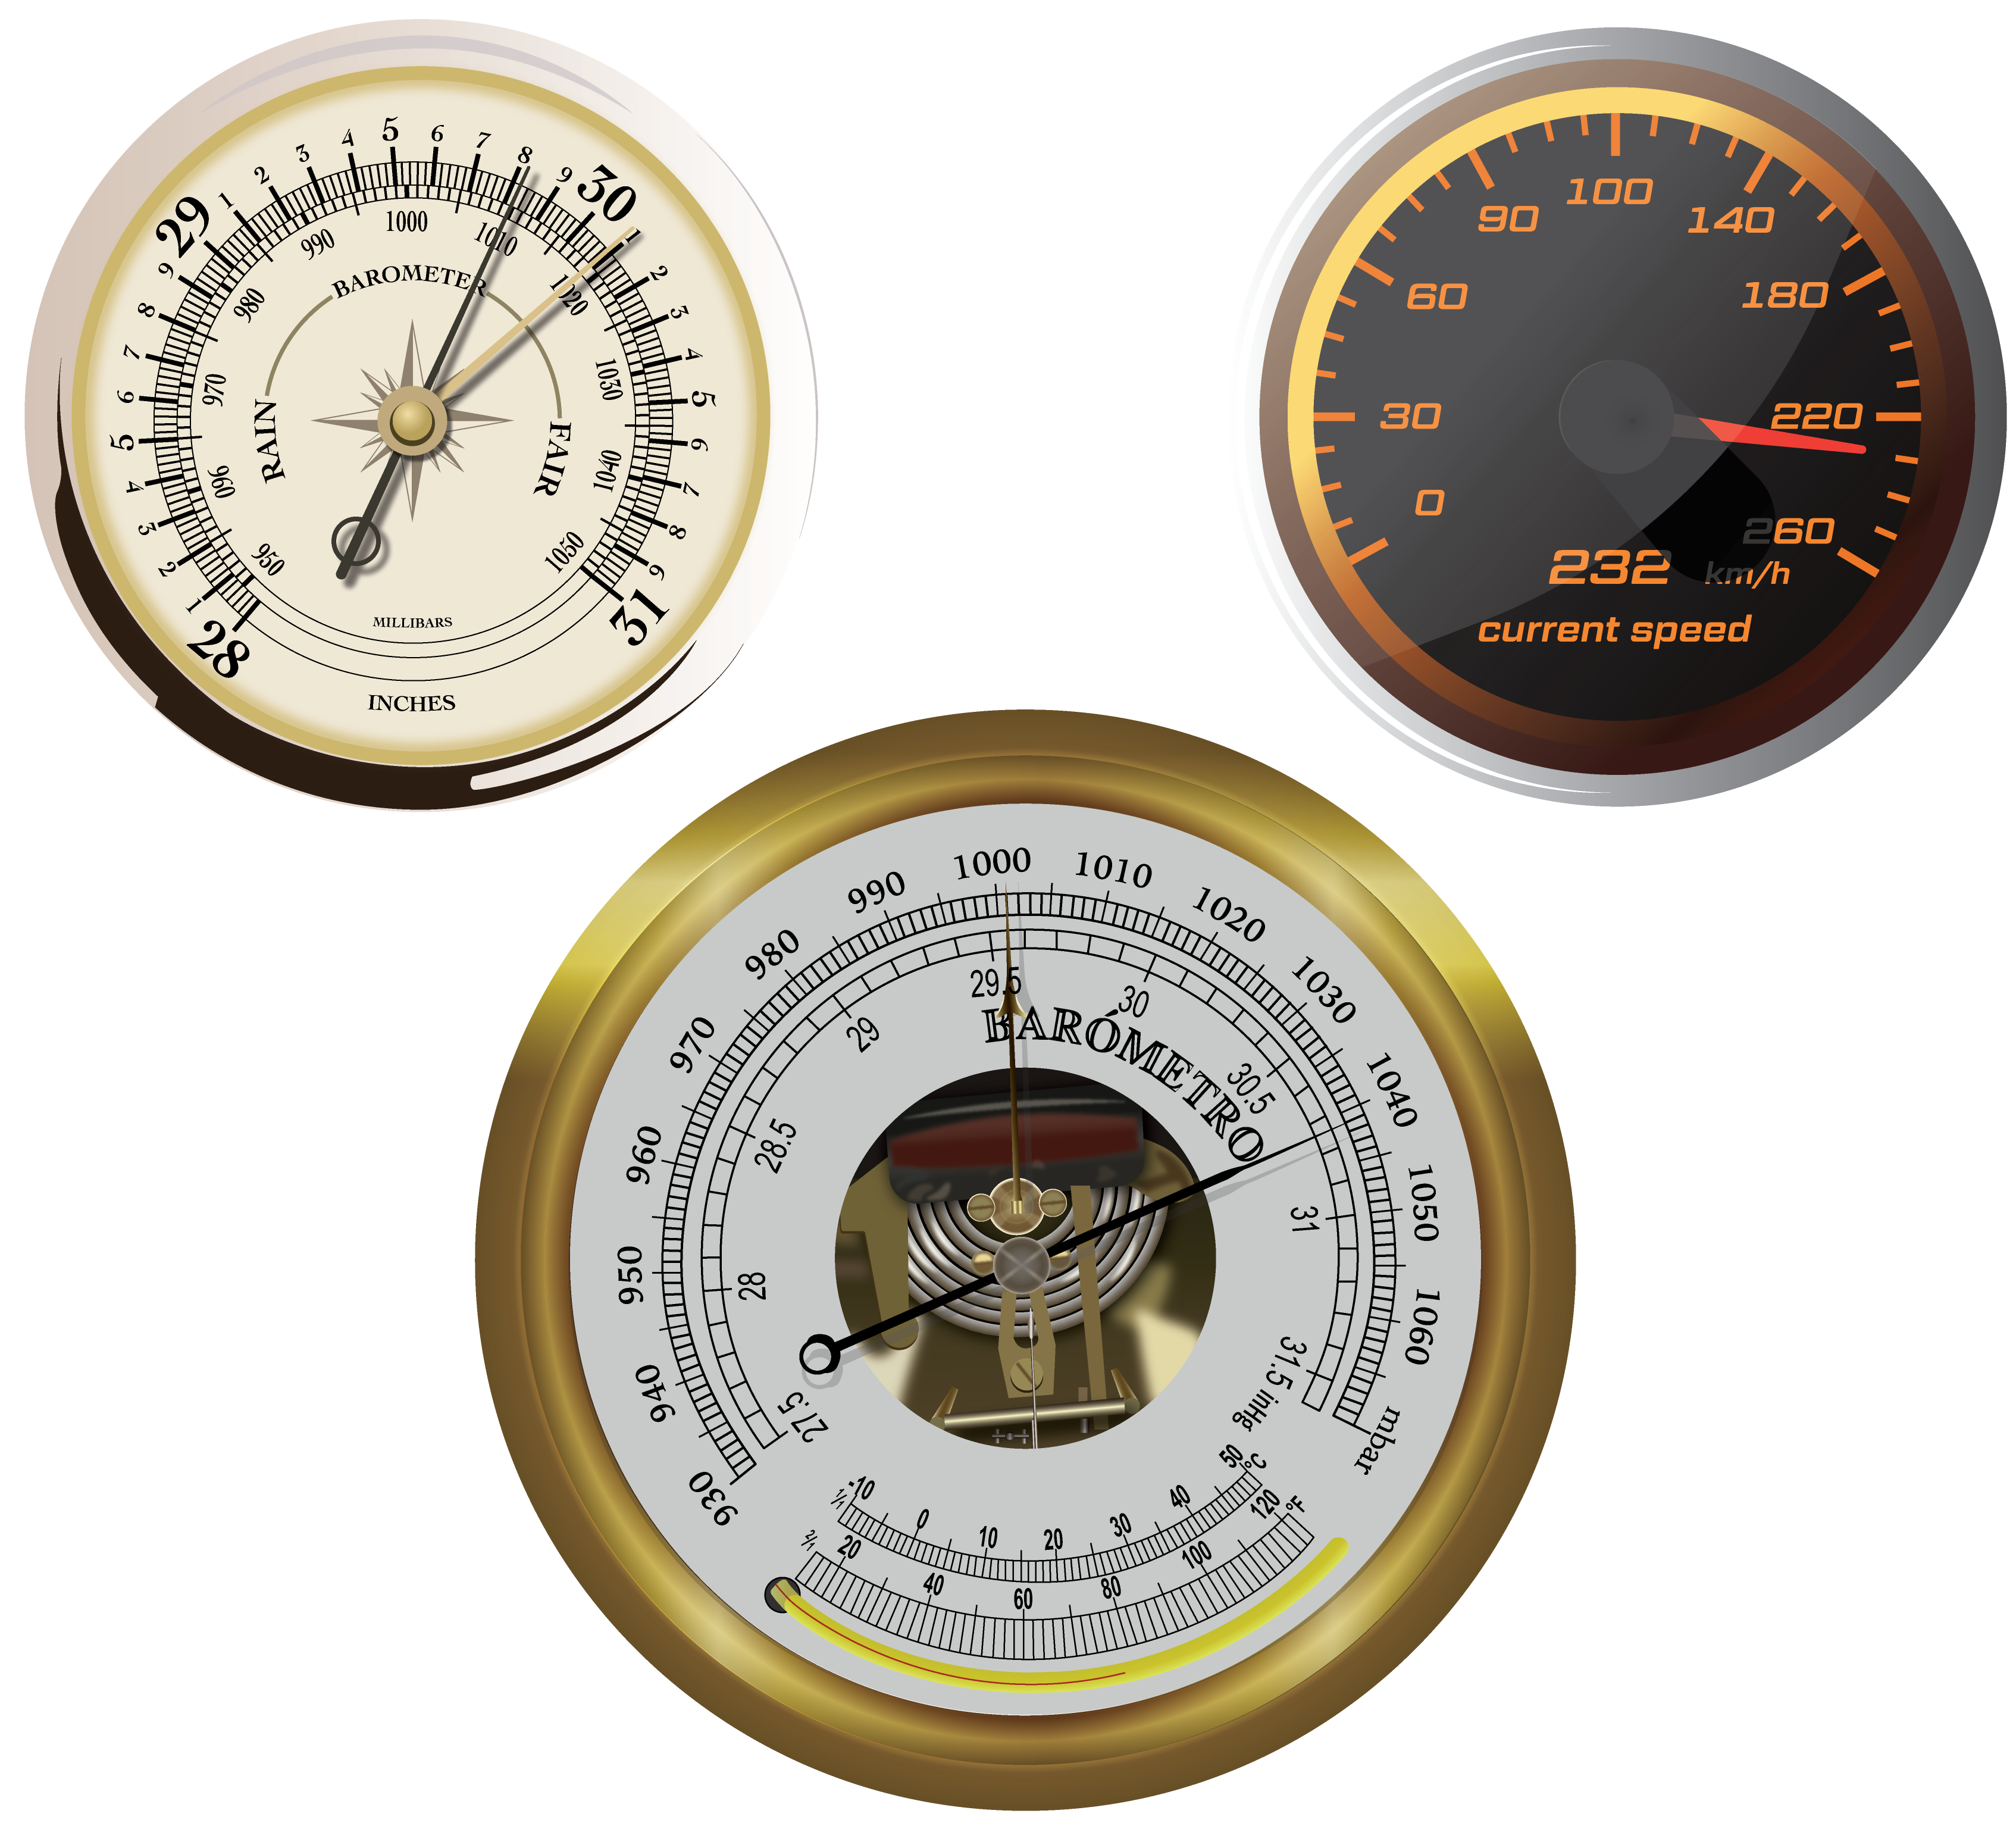 Illustration of a various gauges